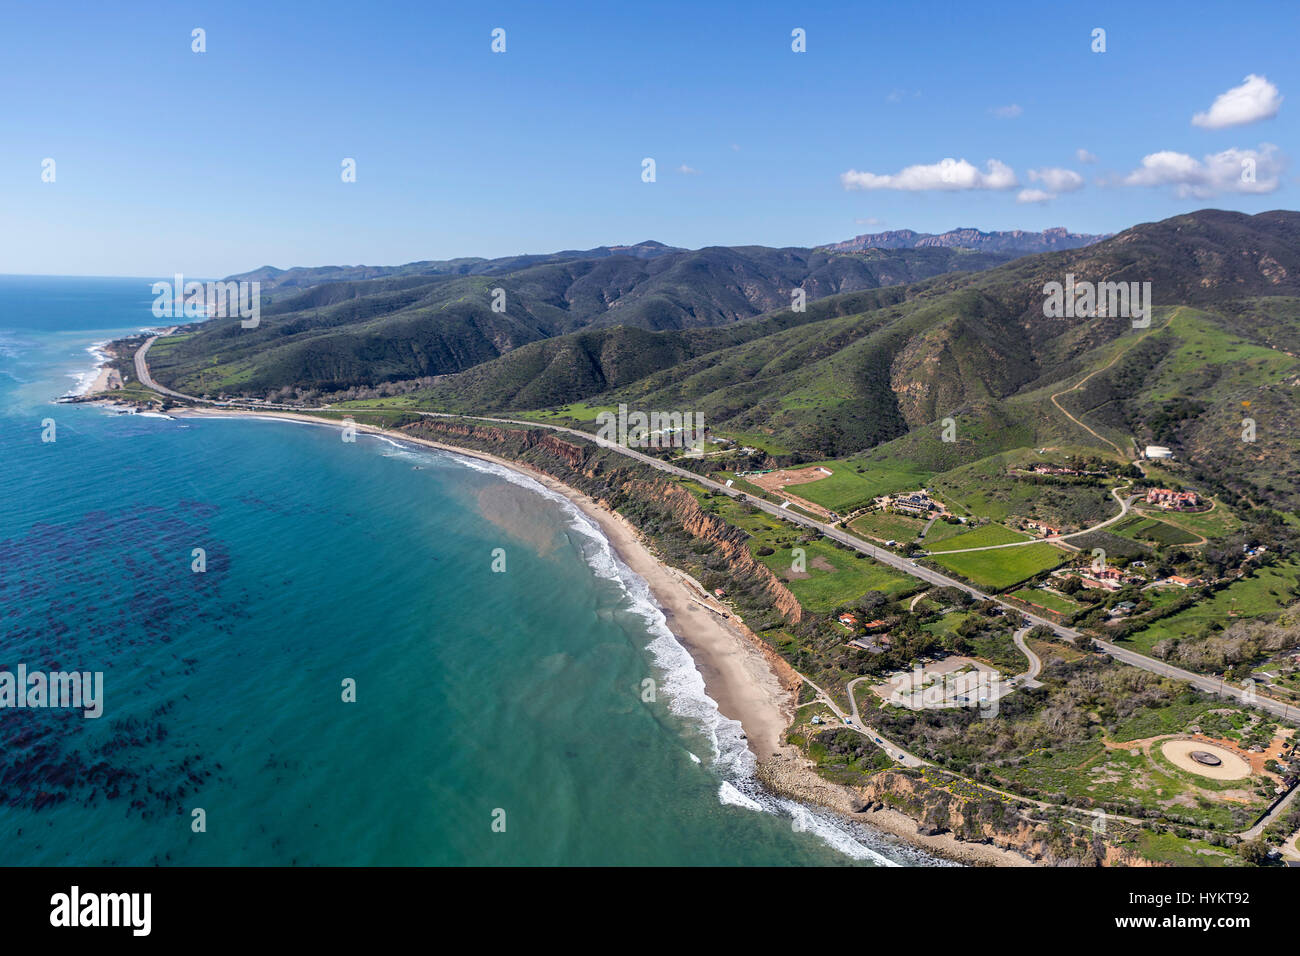 Aerial view of Nichols Canyon County Beach in Malibu, California. Stock Photo